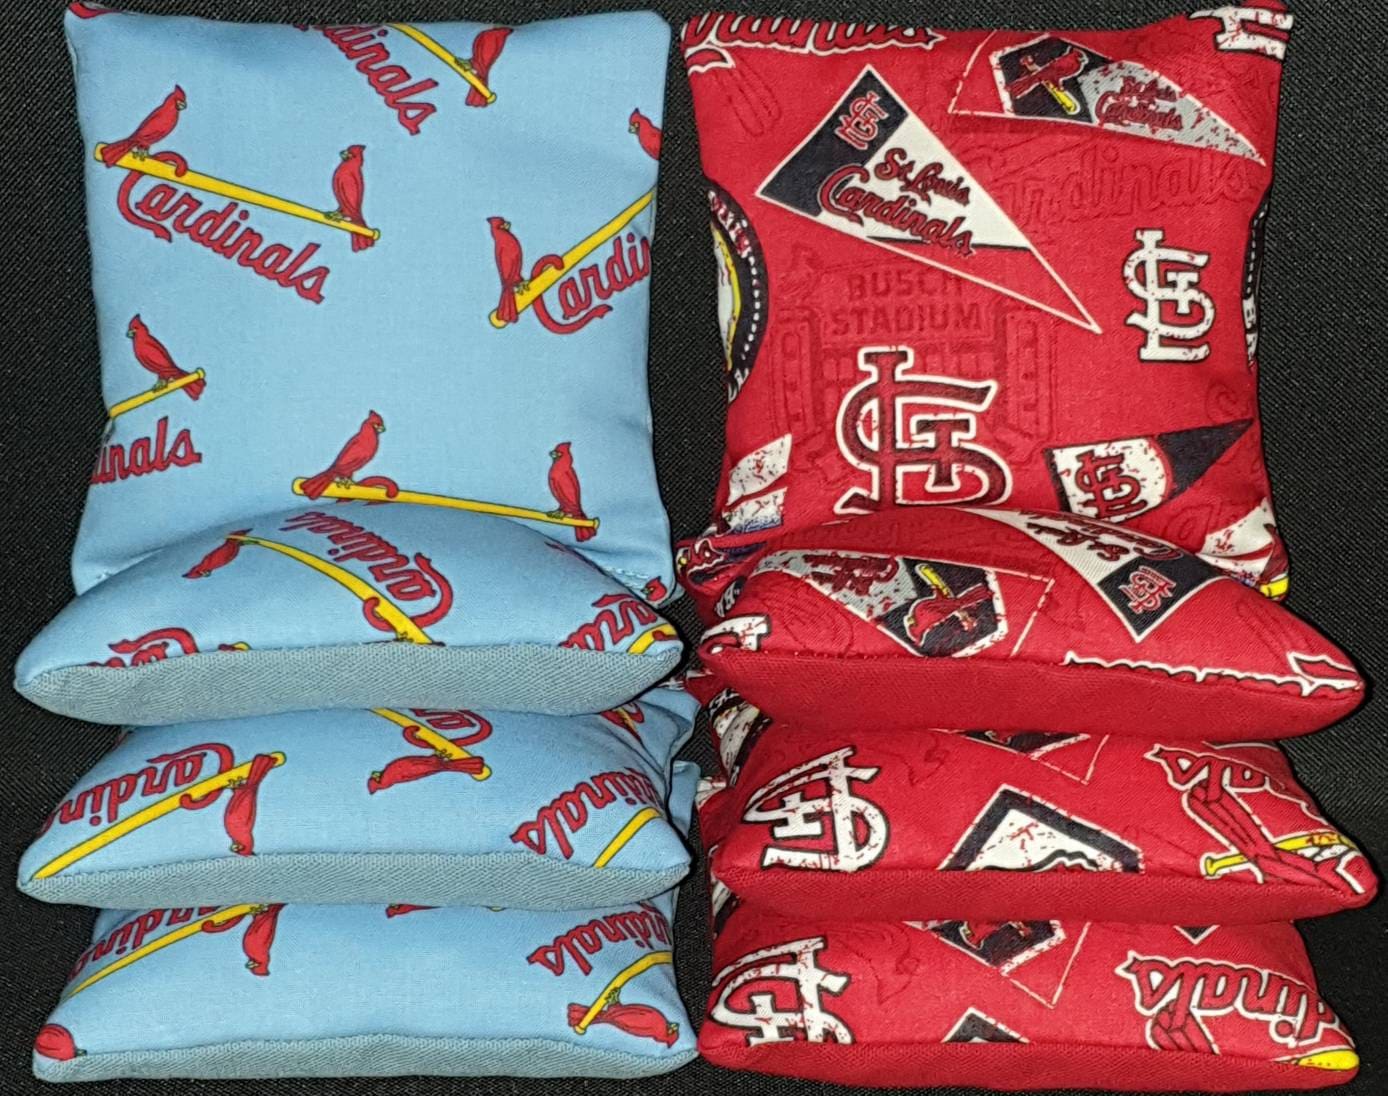 Official St. Louis Cardinals Cornhole Sets, Bean Bags, Bag Toss, Cardinals  Tailgating Games